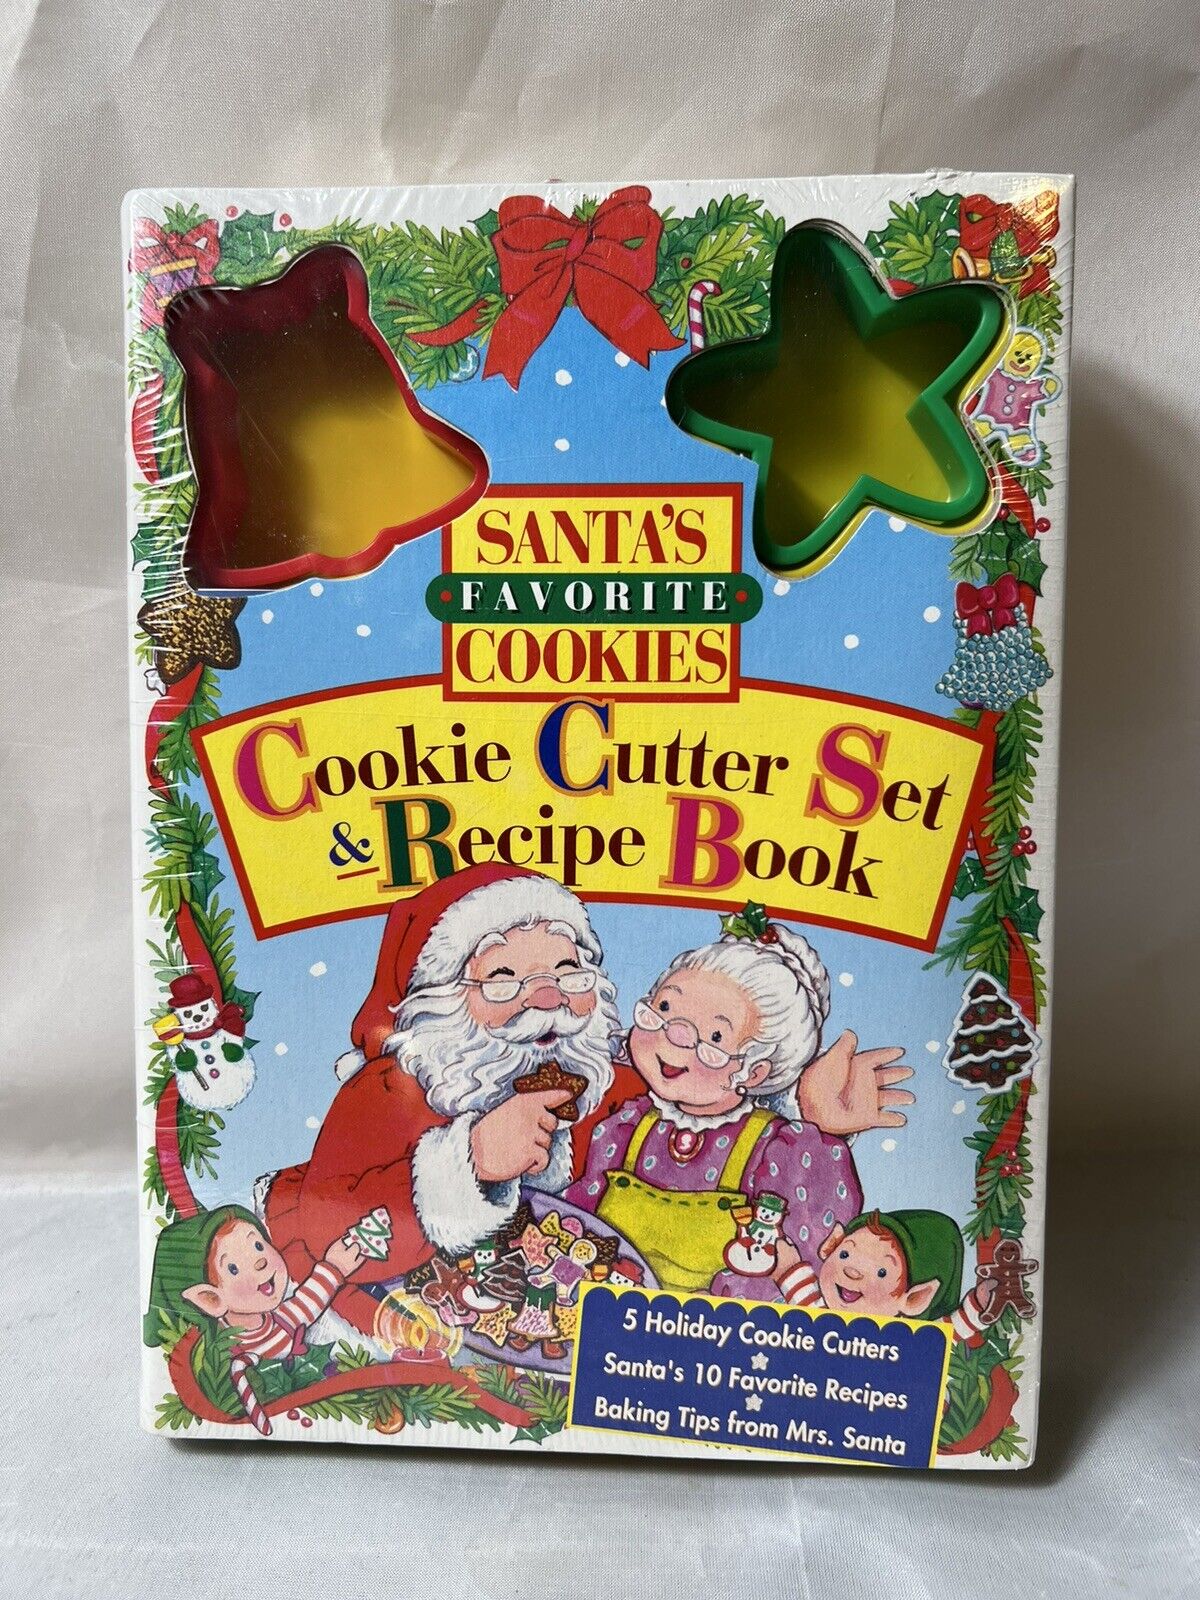 Santa’s Favorite Cookies Cookie Cutter Set & Recipe Book Sealed